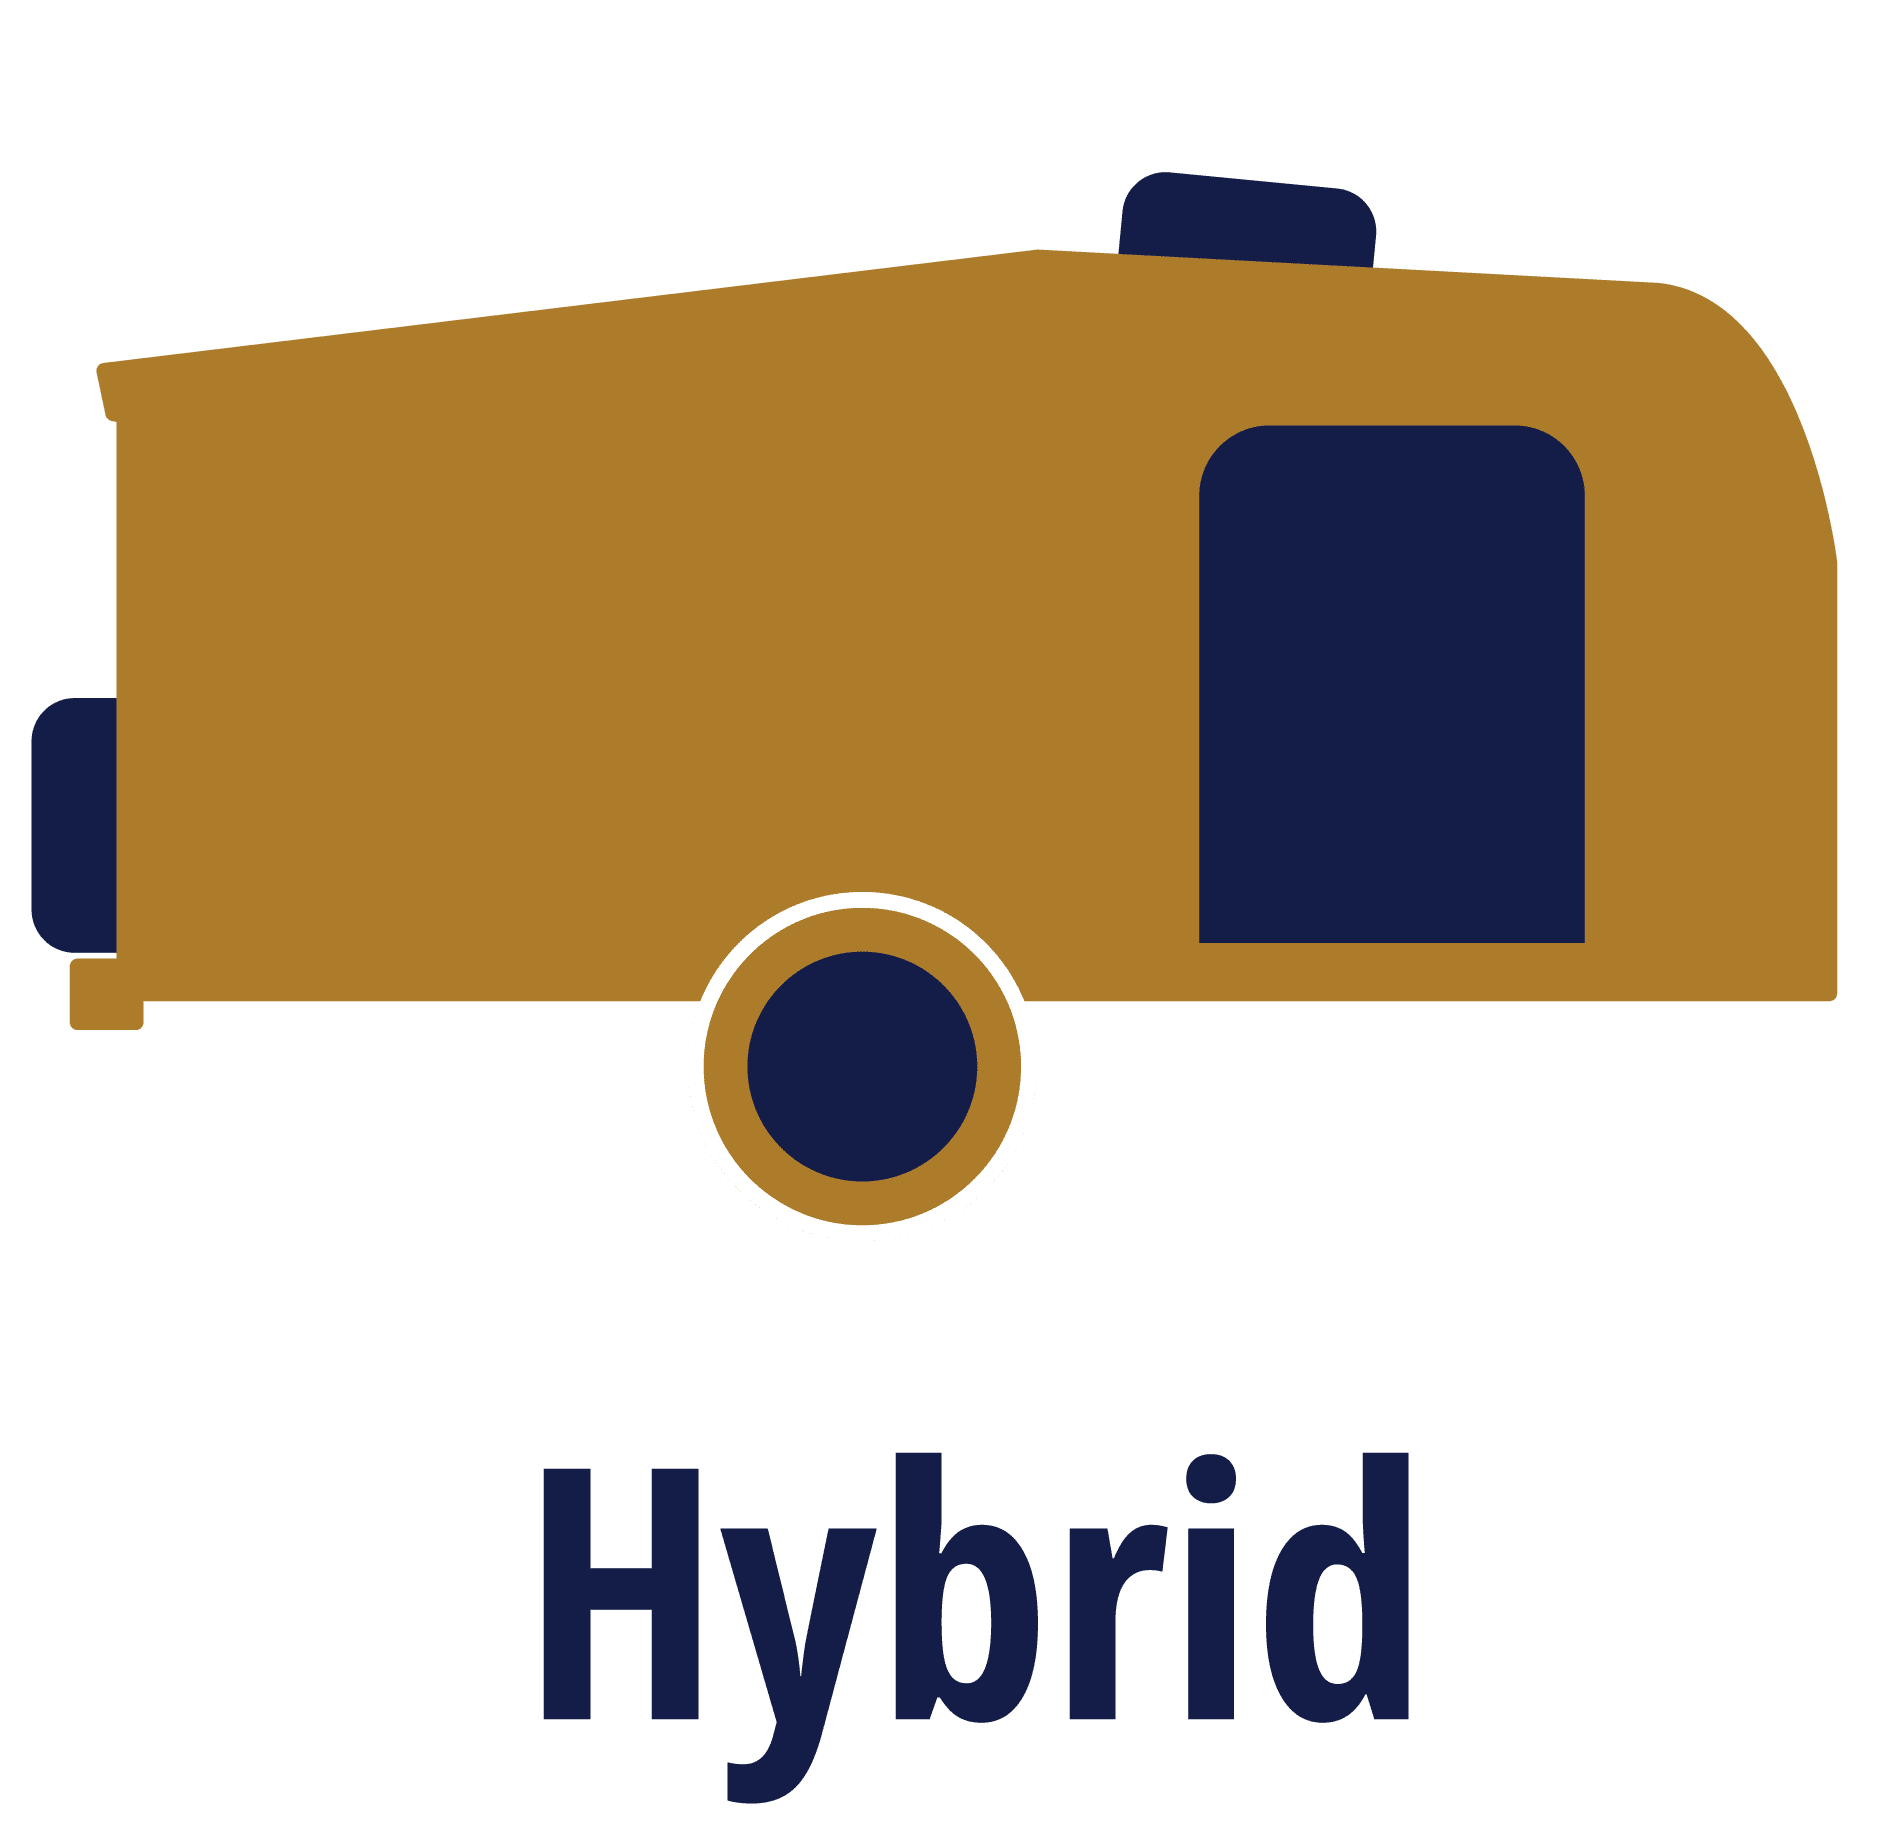 hybrid icon